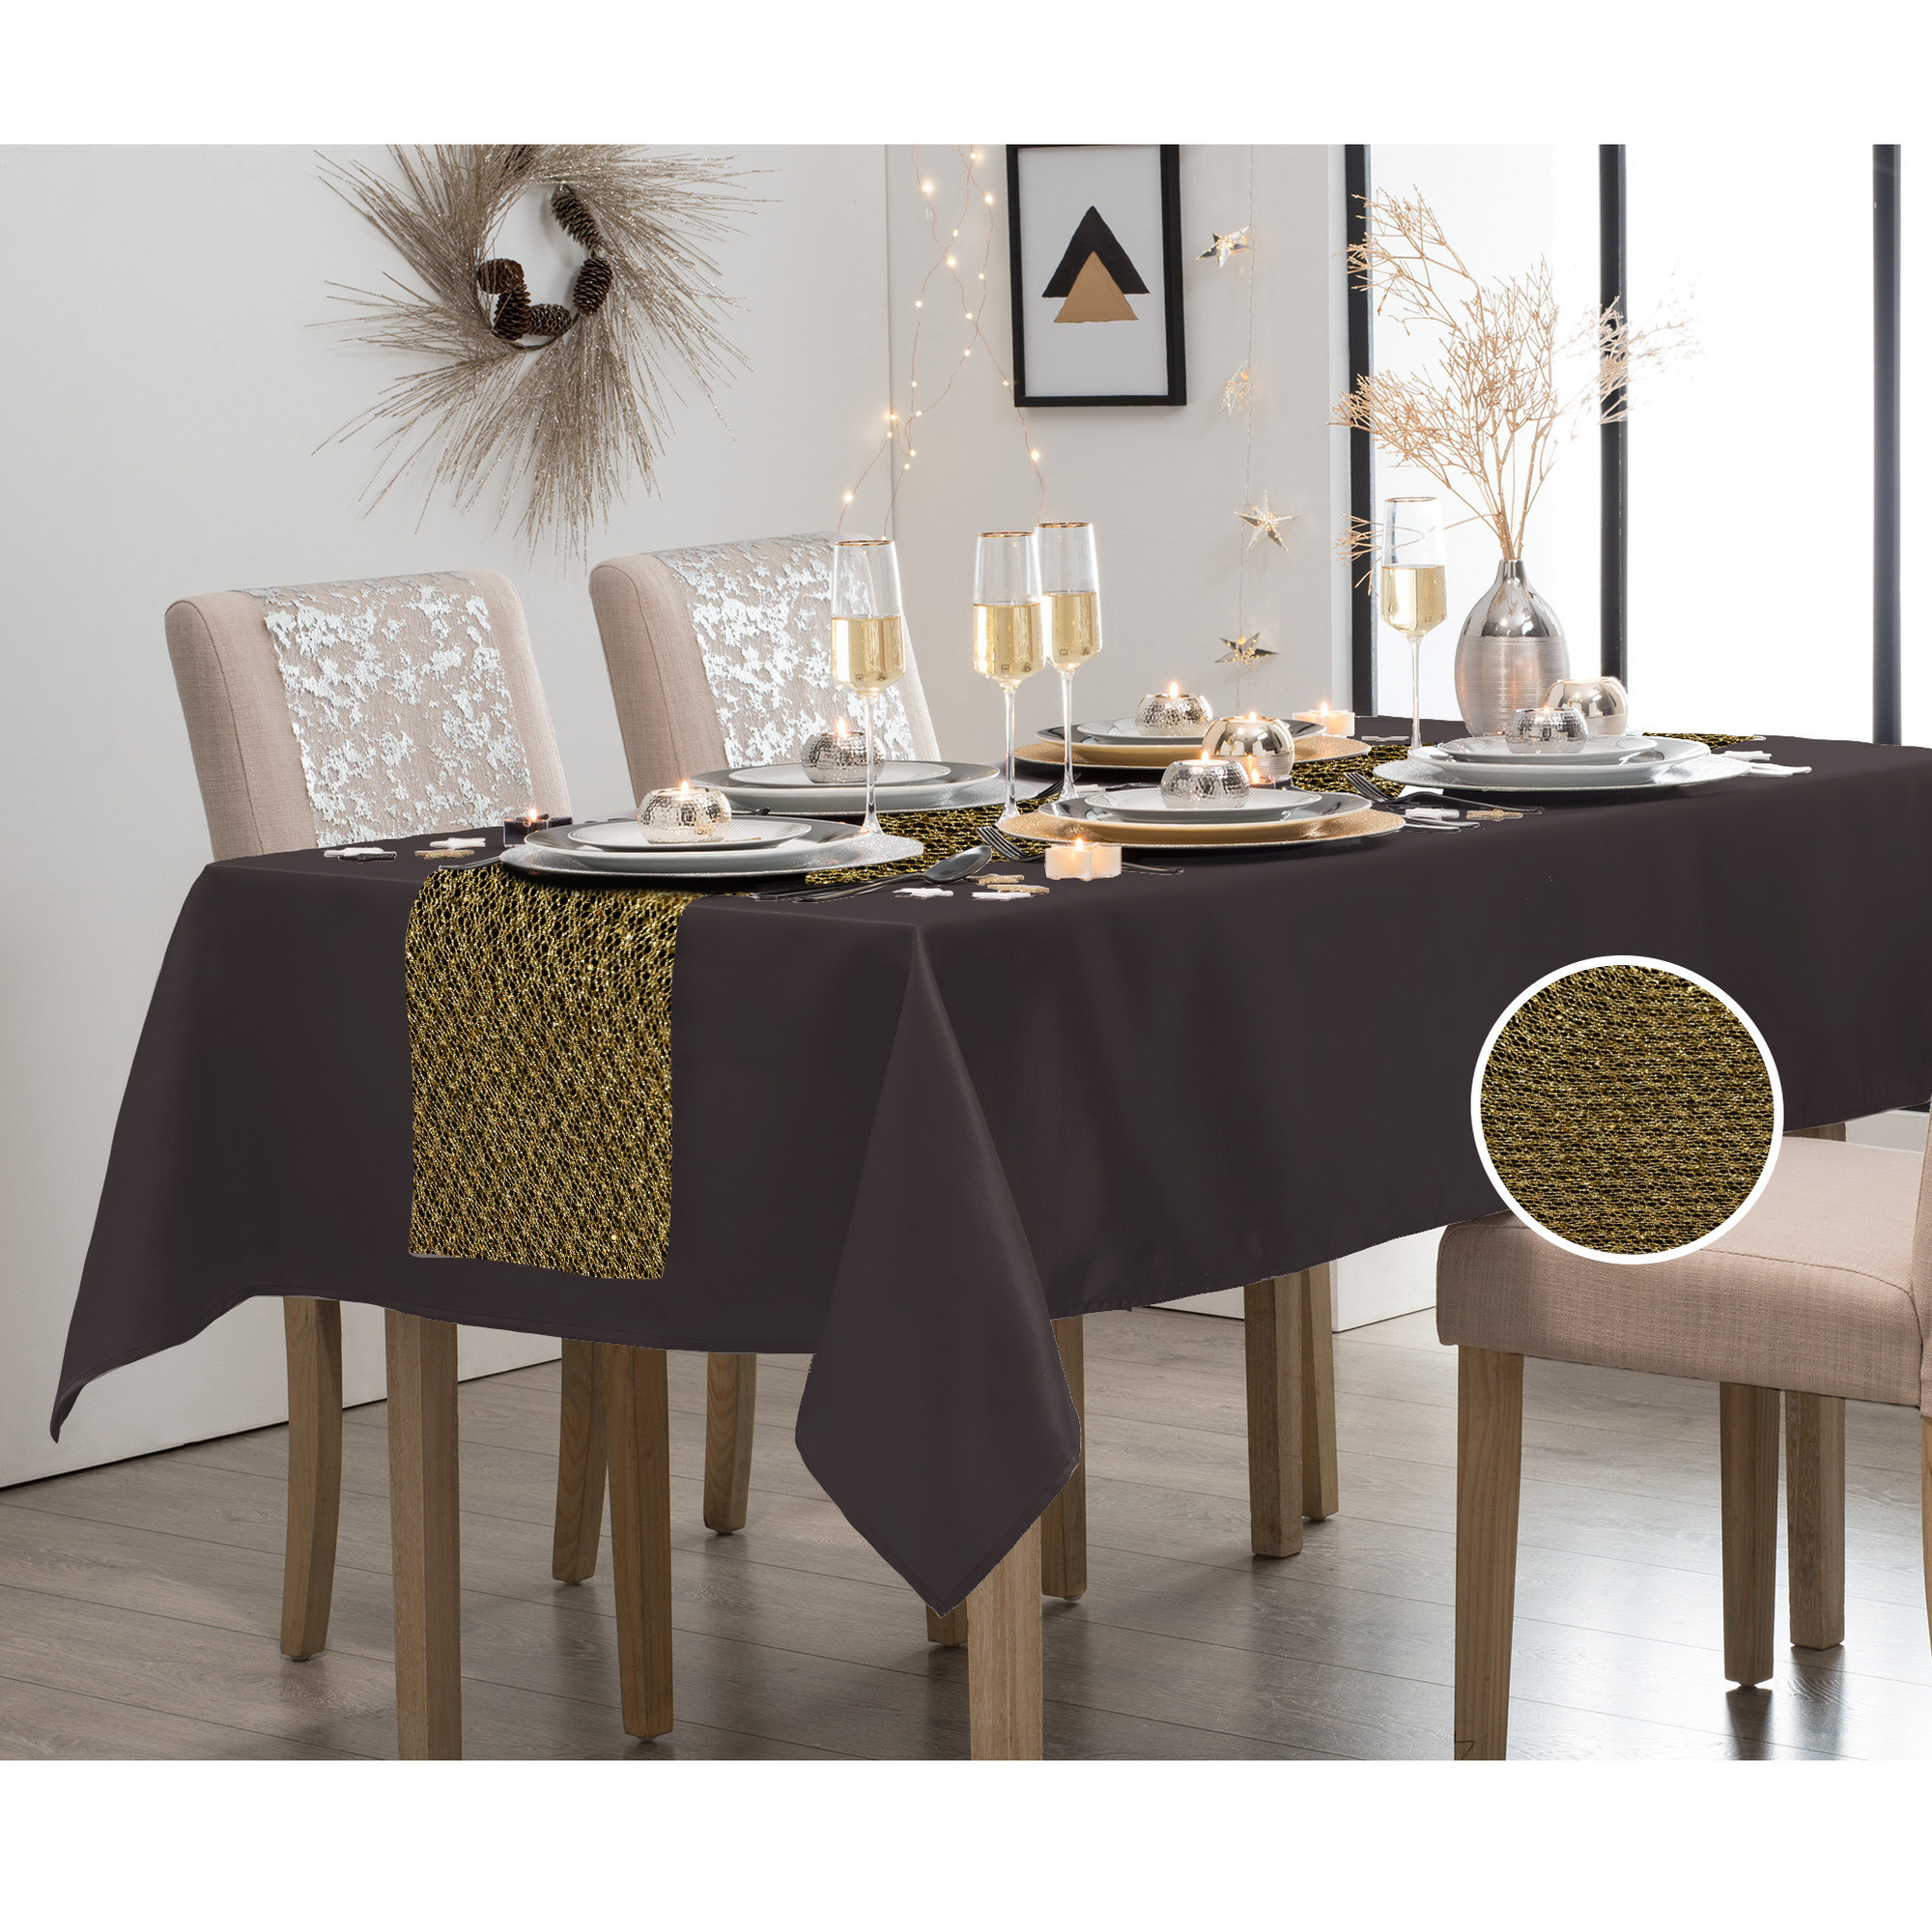 Merkloos Zwart tafelkleed/tafellaken x 240 cm - met tafelloper goud glitter 28 x 300 cm -